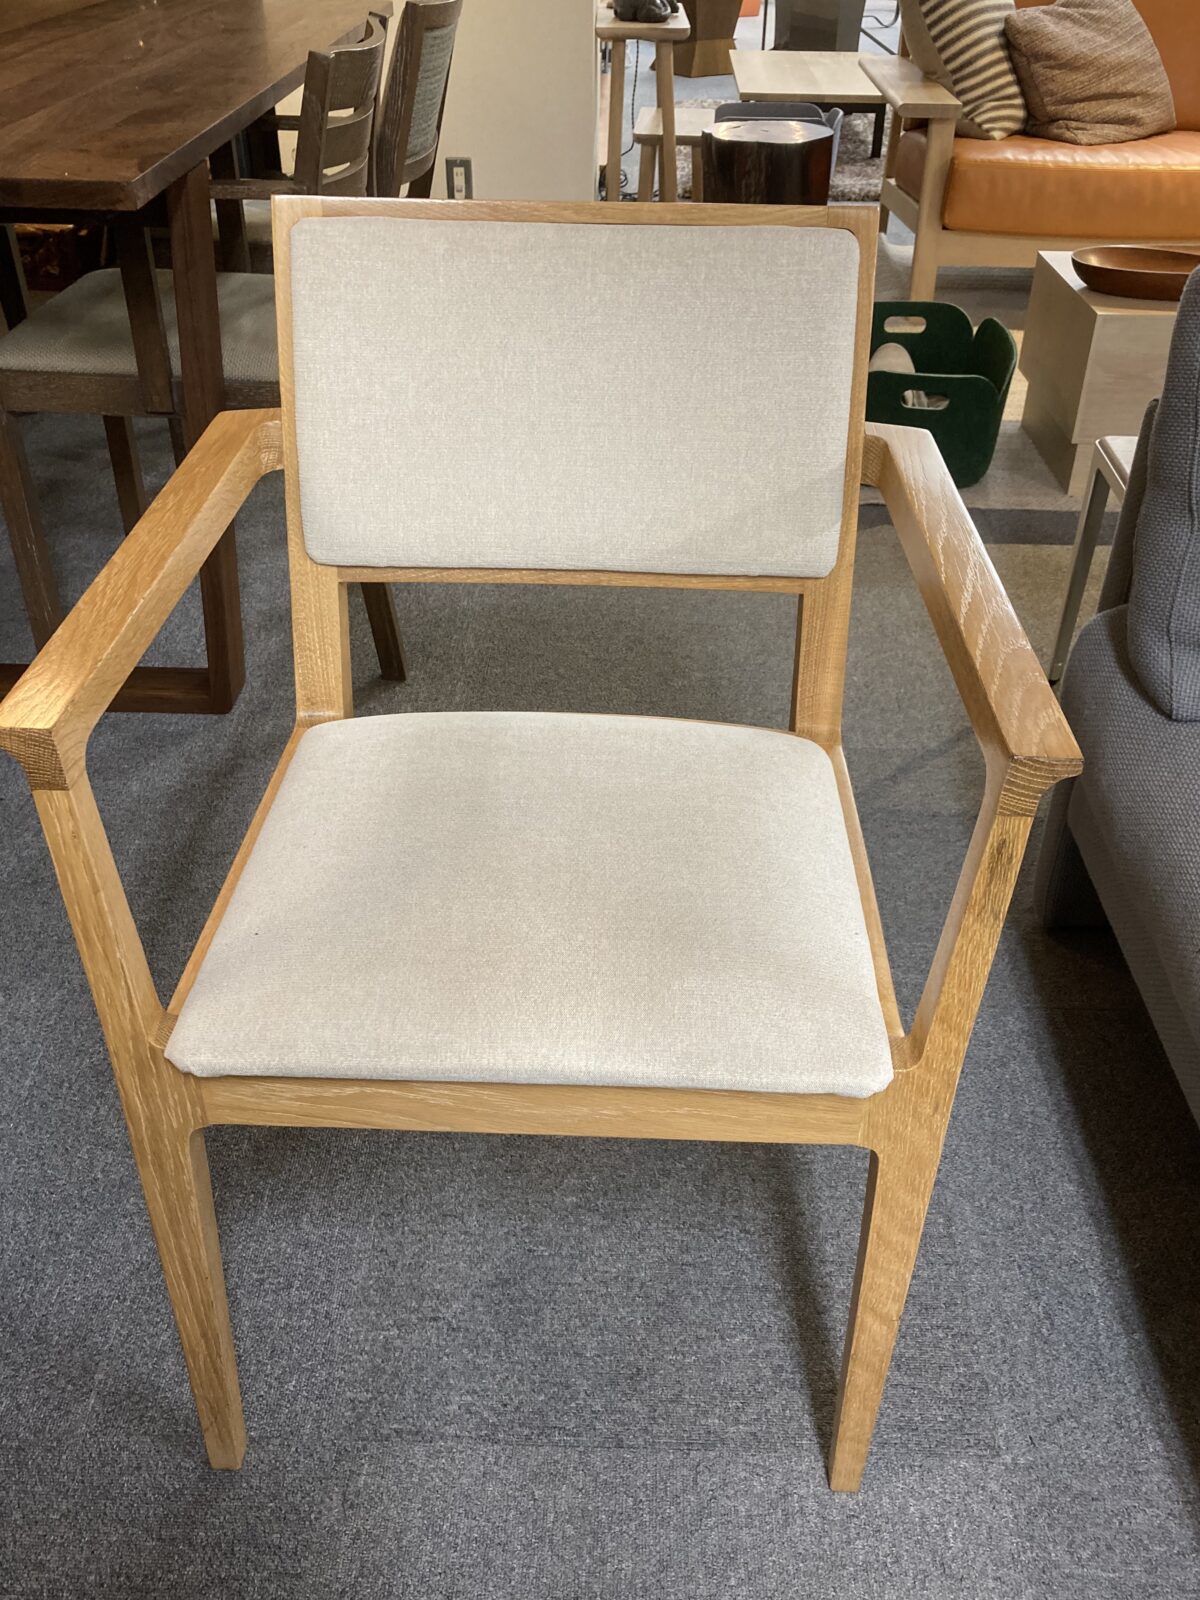 Stipe chair